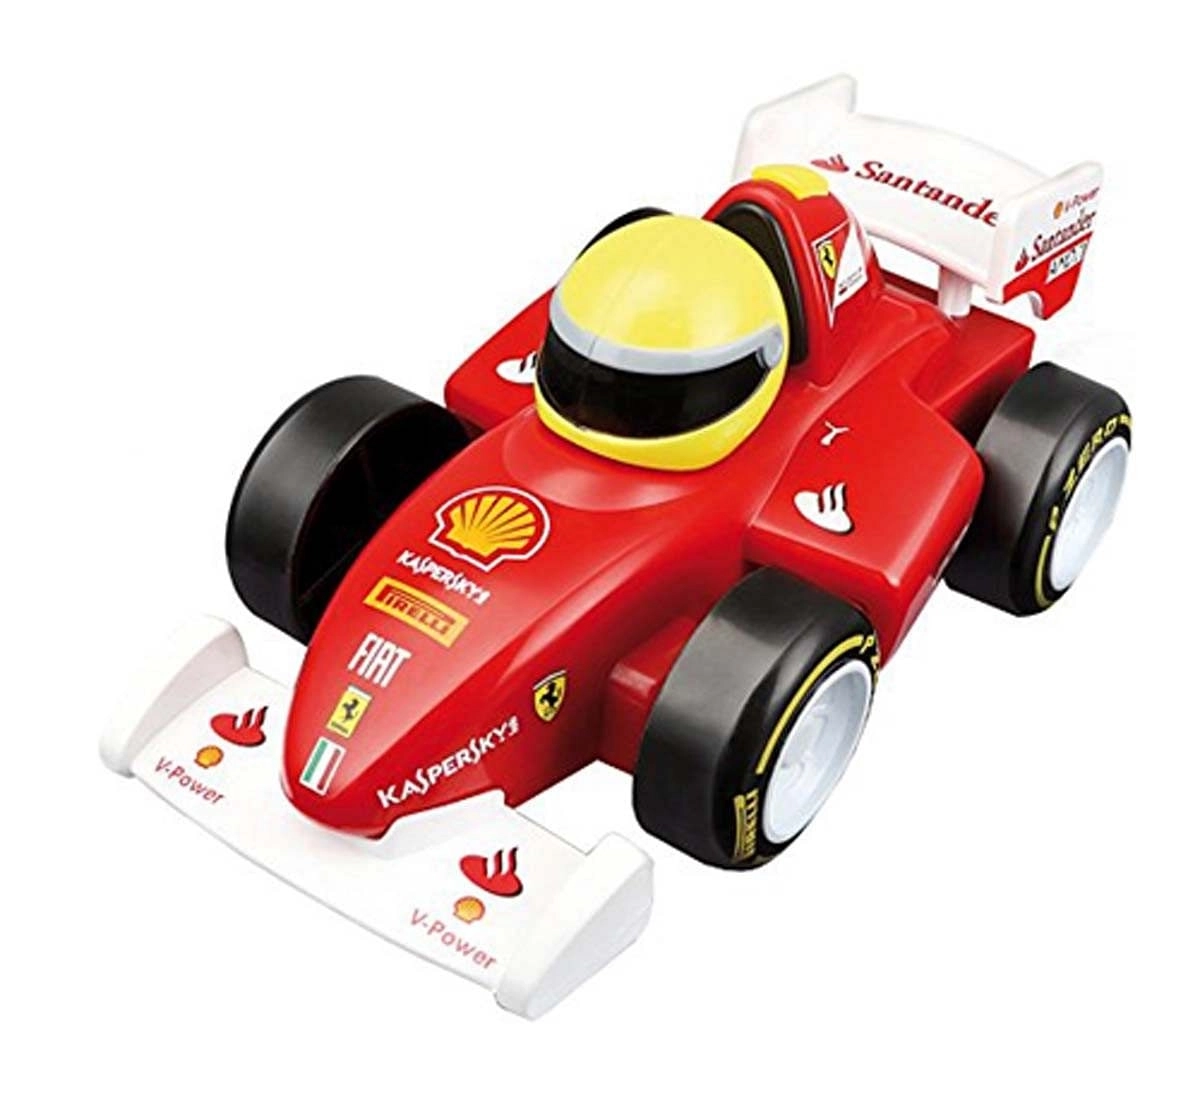 Bburago Junior Ferrari Touch Go Activity Toys for Kids Age 12M+ (Red)